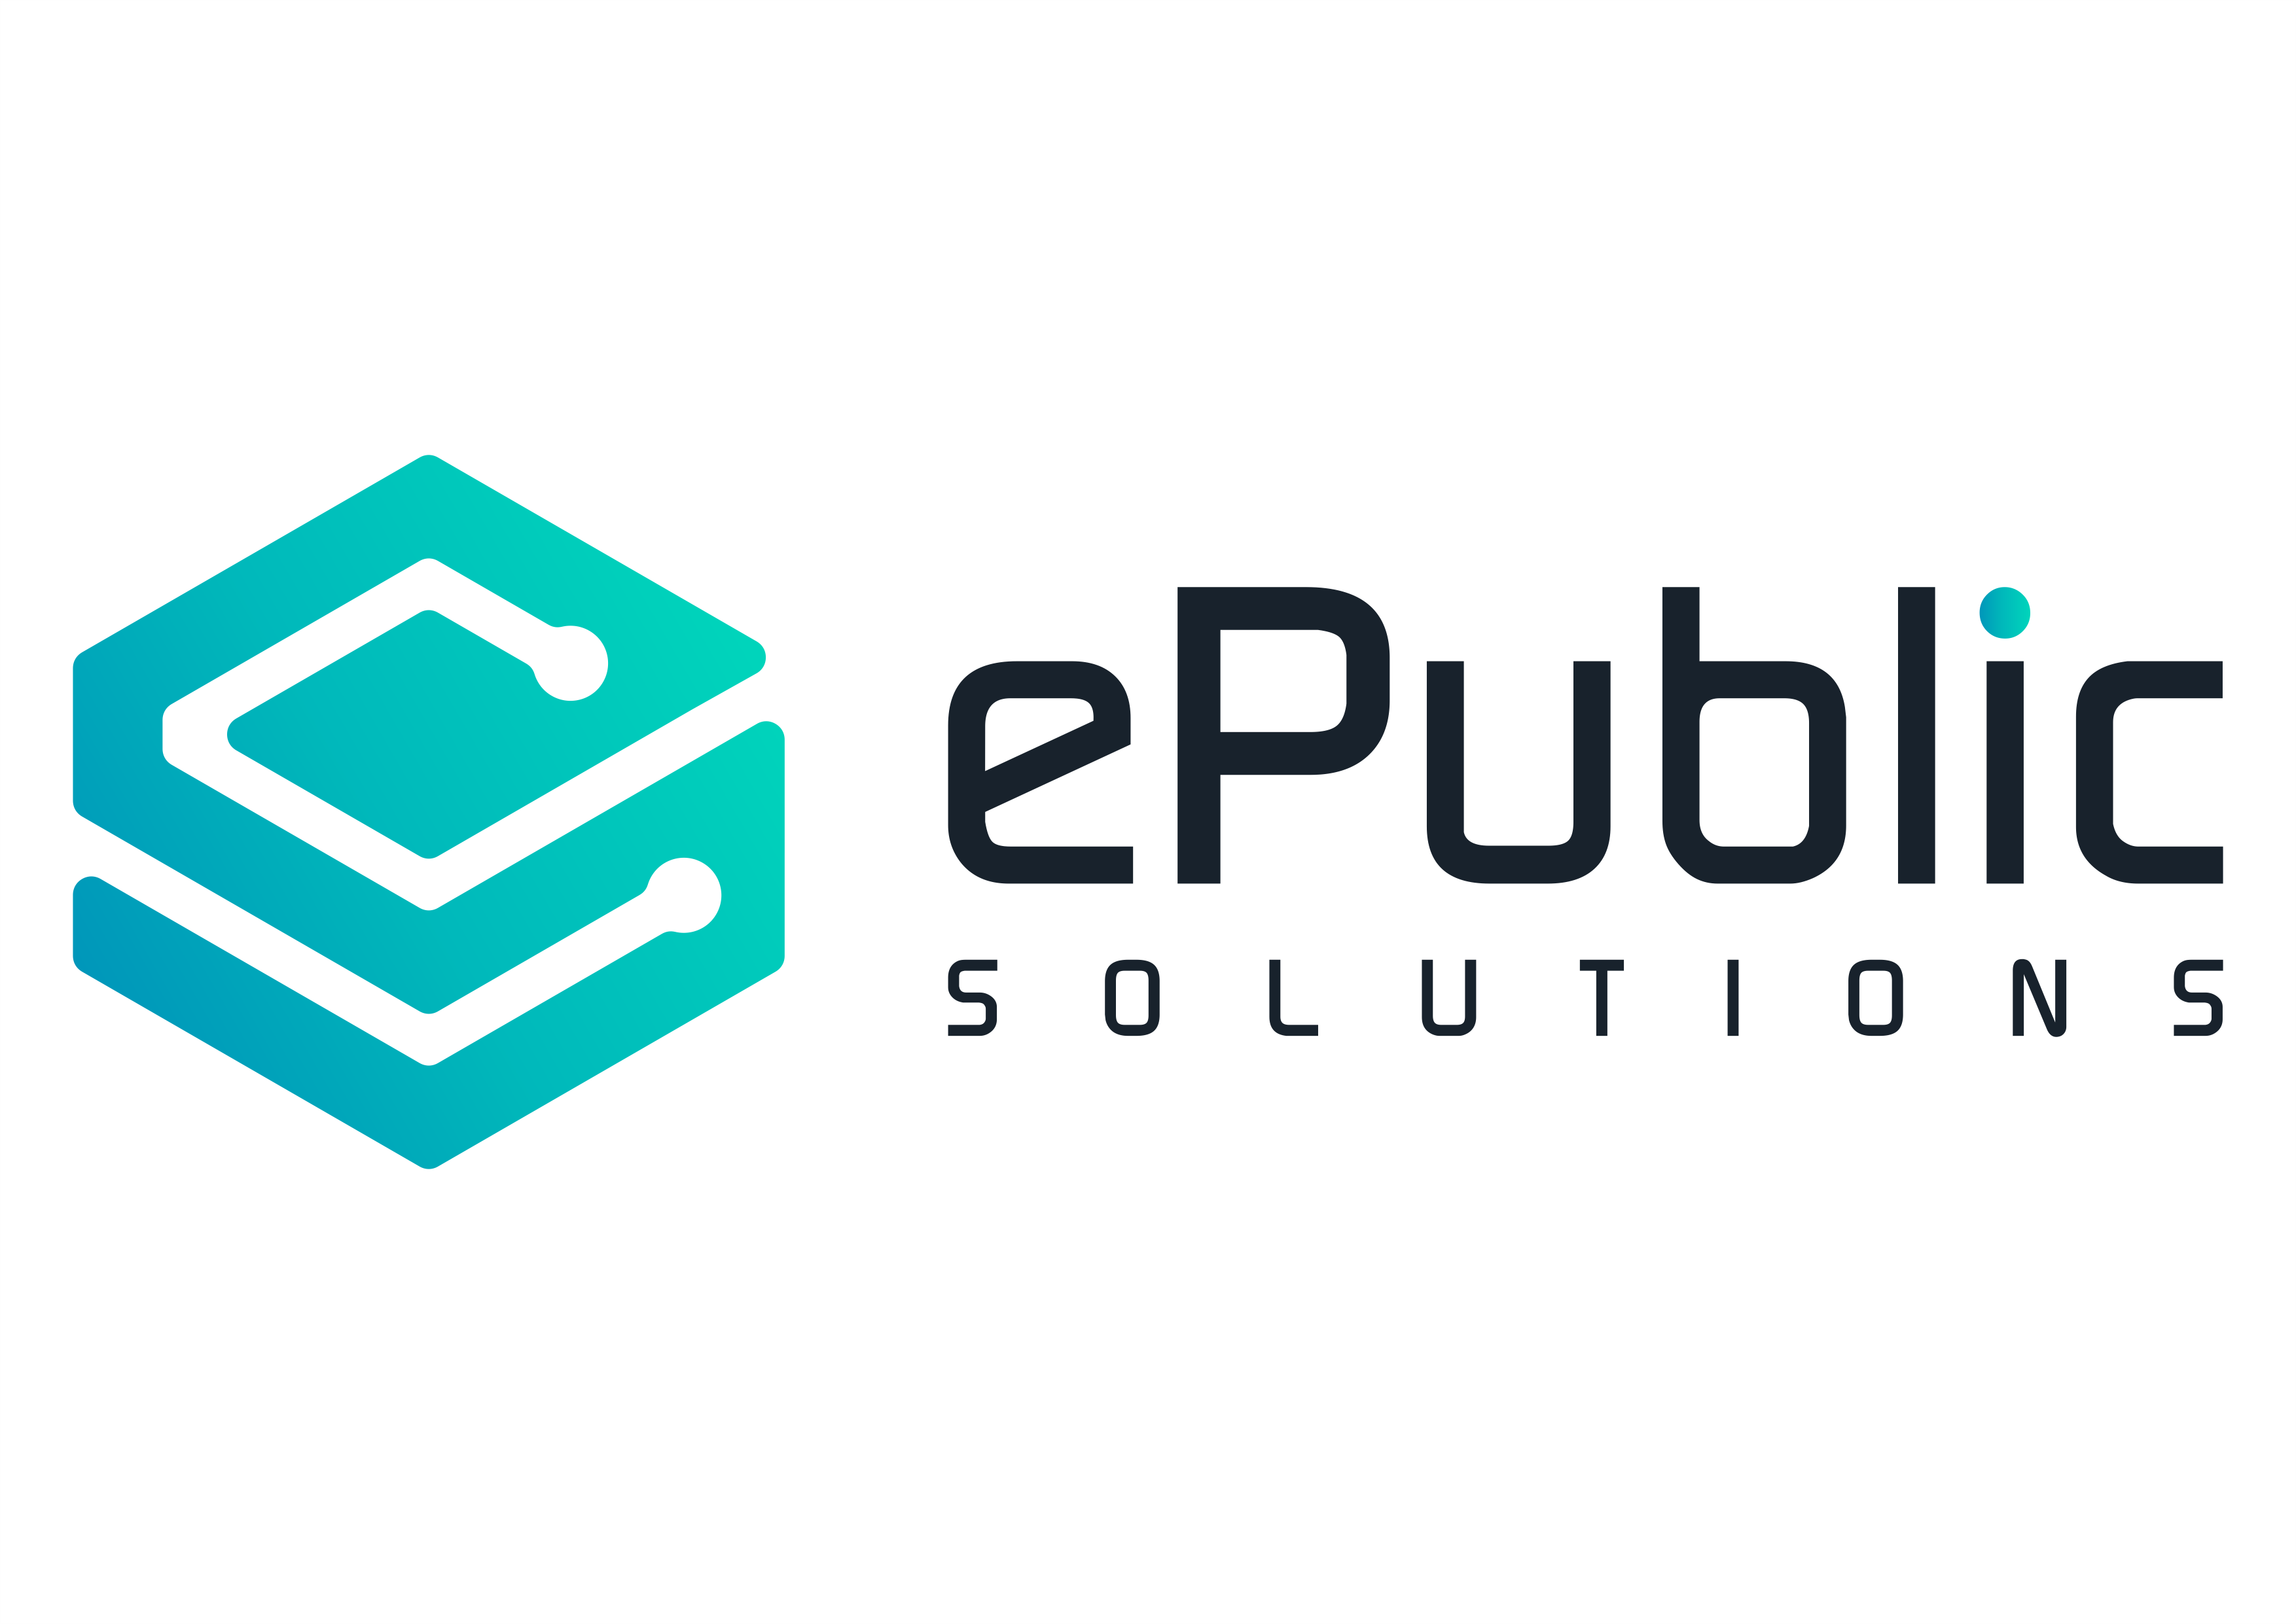 ePublic Solutions